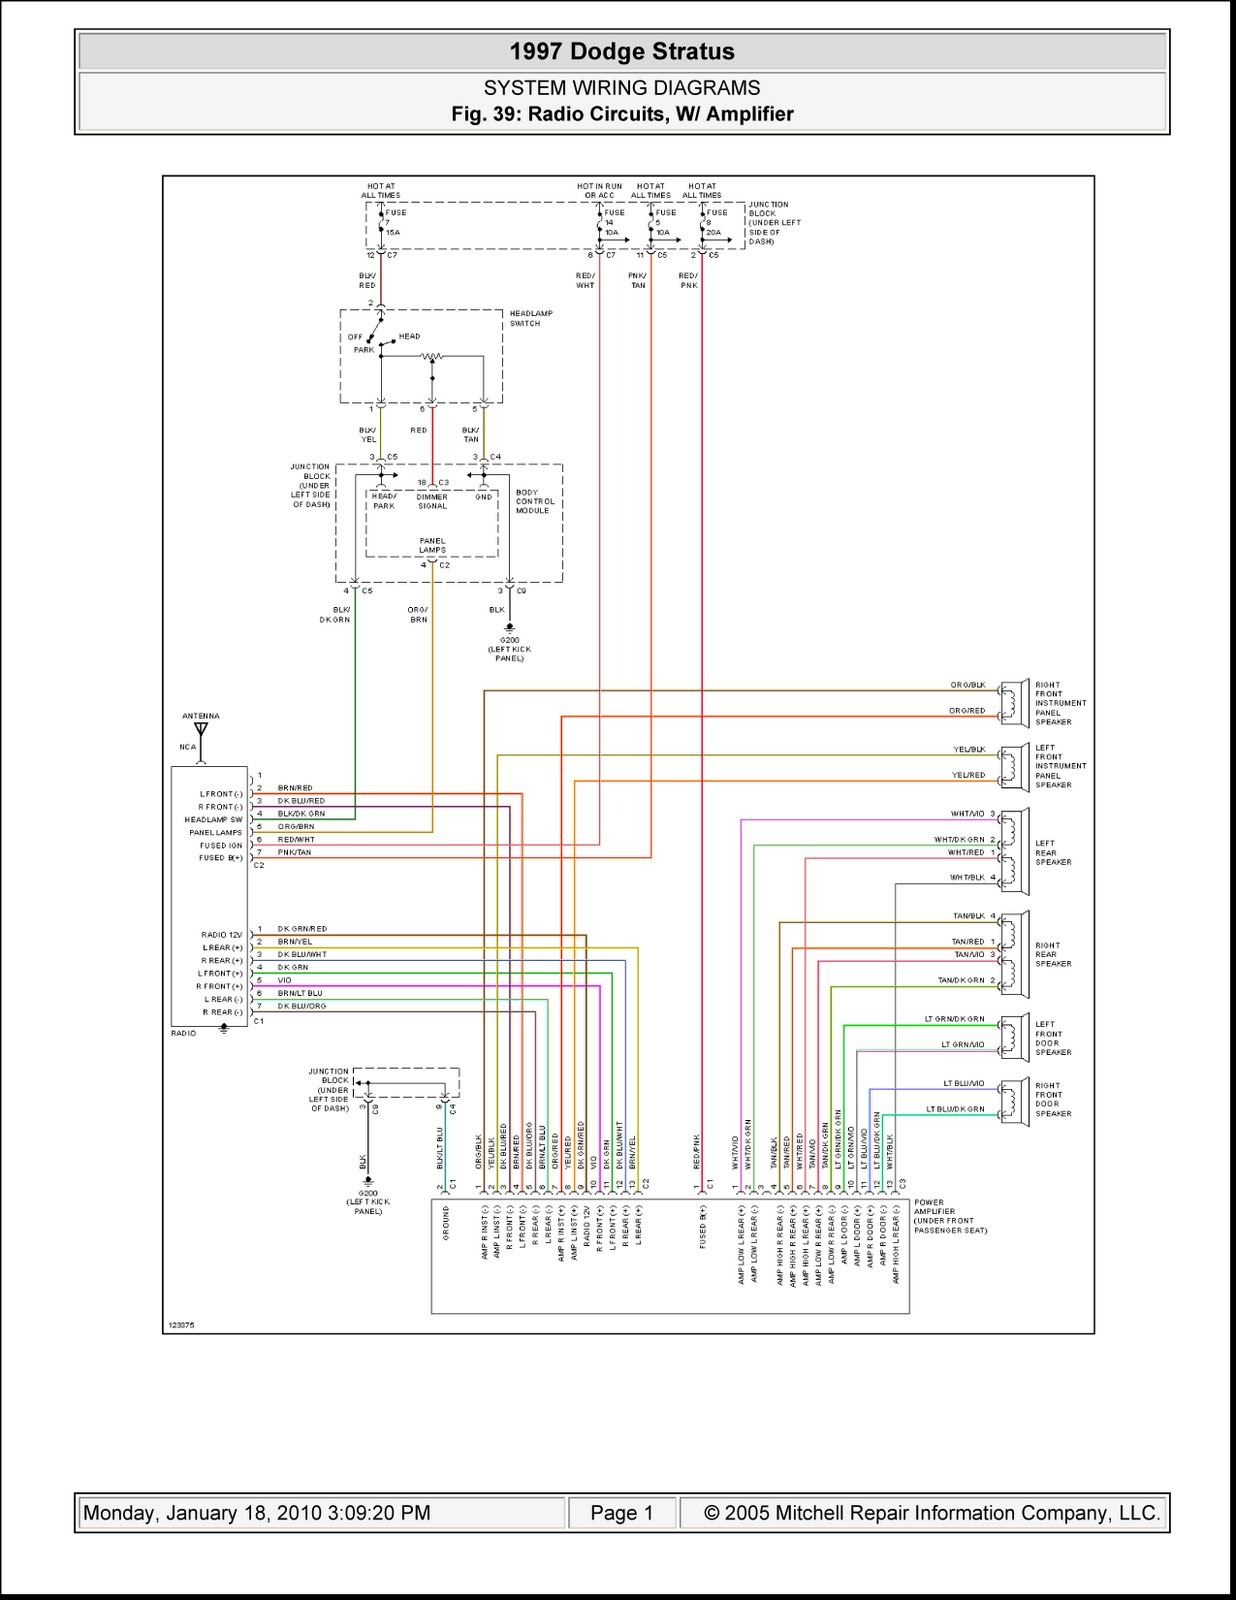 2006 Dodge Stratus Radio Wiring Diagram Wiring Diagrams Source